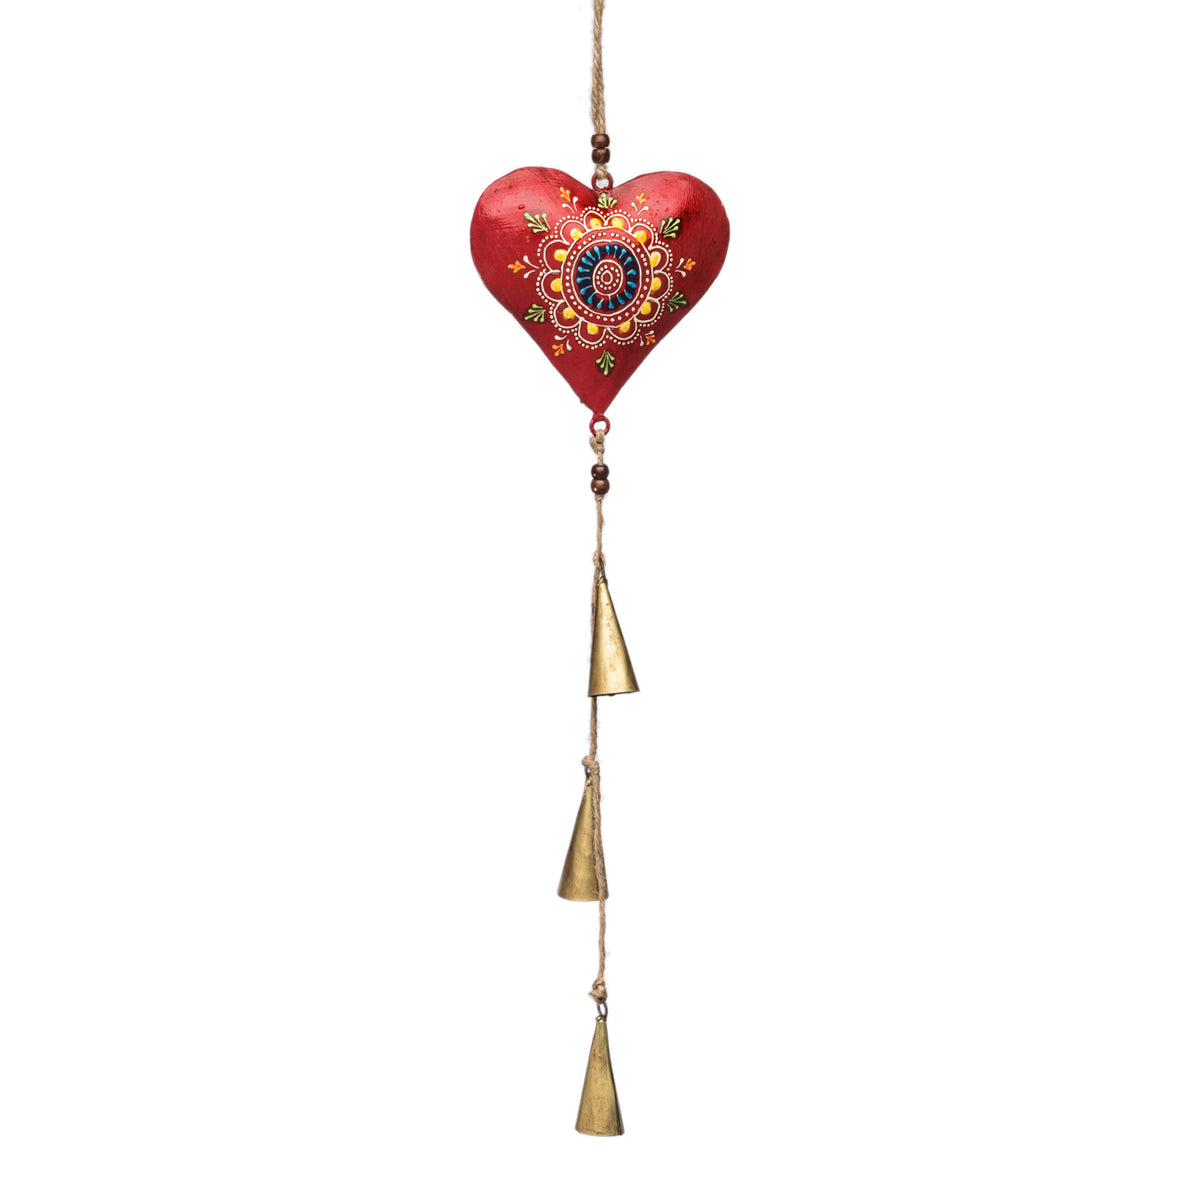 Henna Treasure Bell Chime - Heart